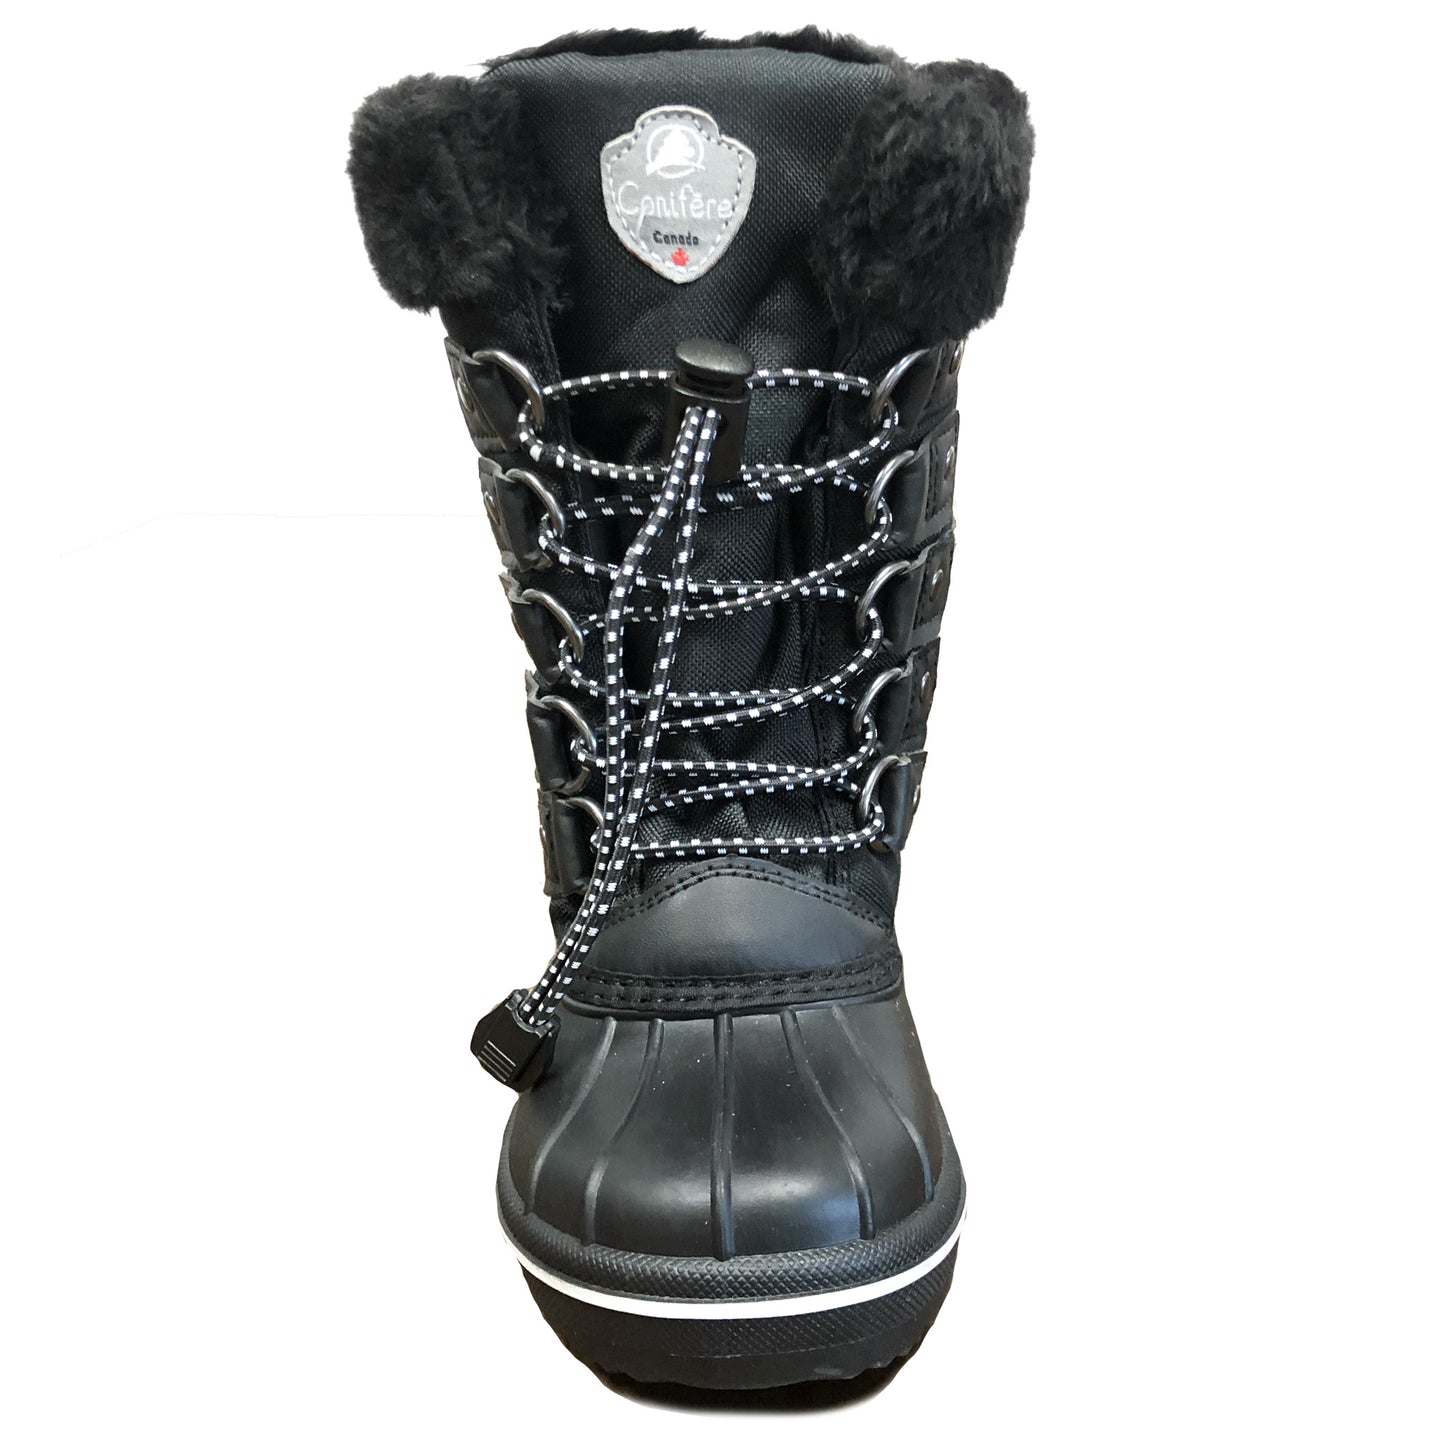 MIRA - Girls' Black Winter Boots